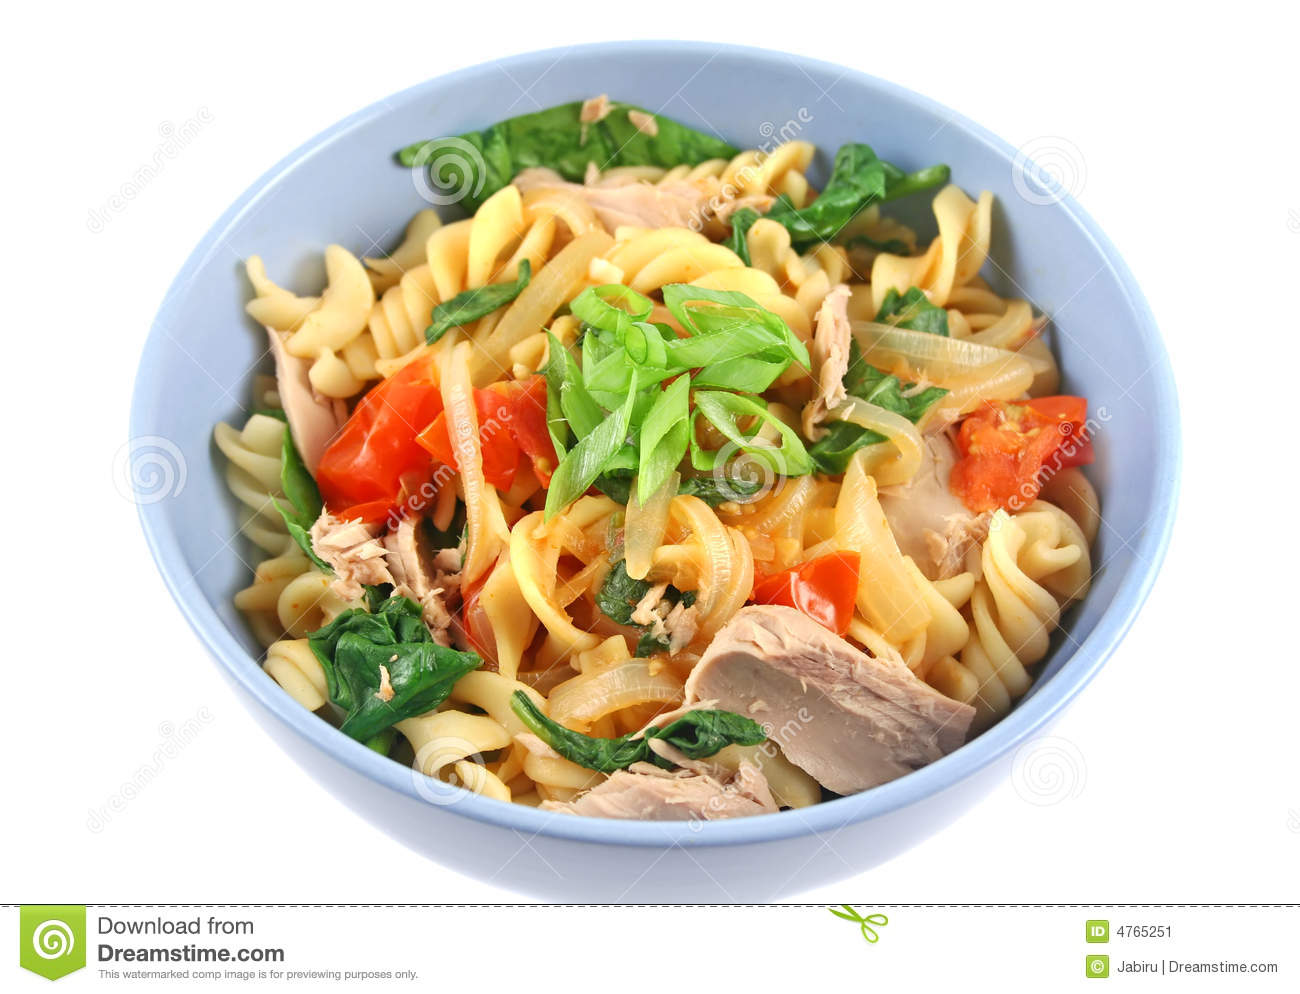 Spiral Pasta With Tuna Stock Image   Image  4765251